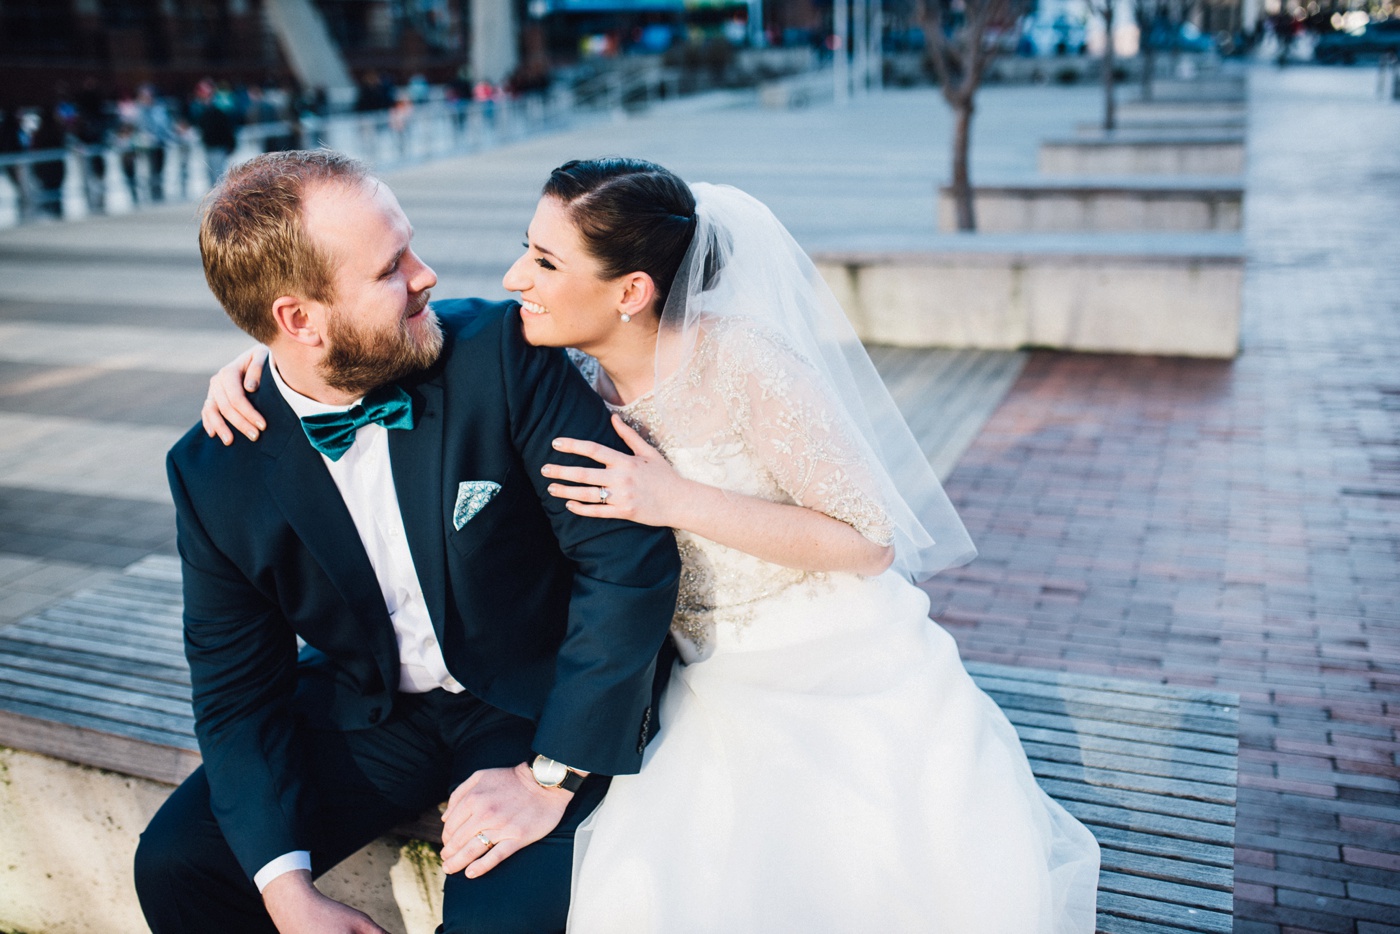 30 - Amy + Jacob - Silver Spring Civic Building - Maryland Wedding Photographer - Alison Dunn Photography photo